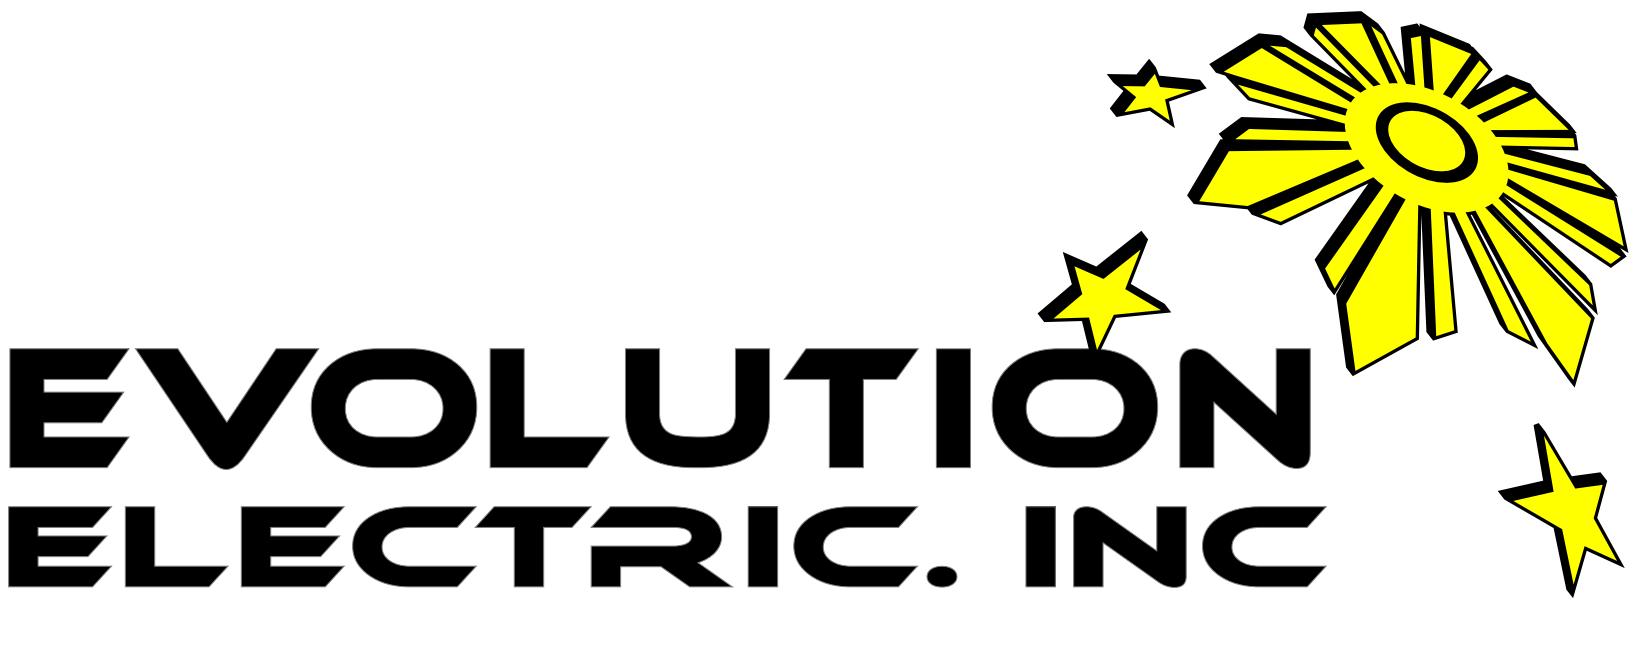 Evolution Electric Inc Business Logo